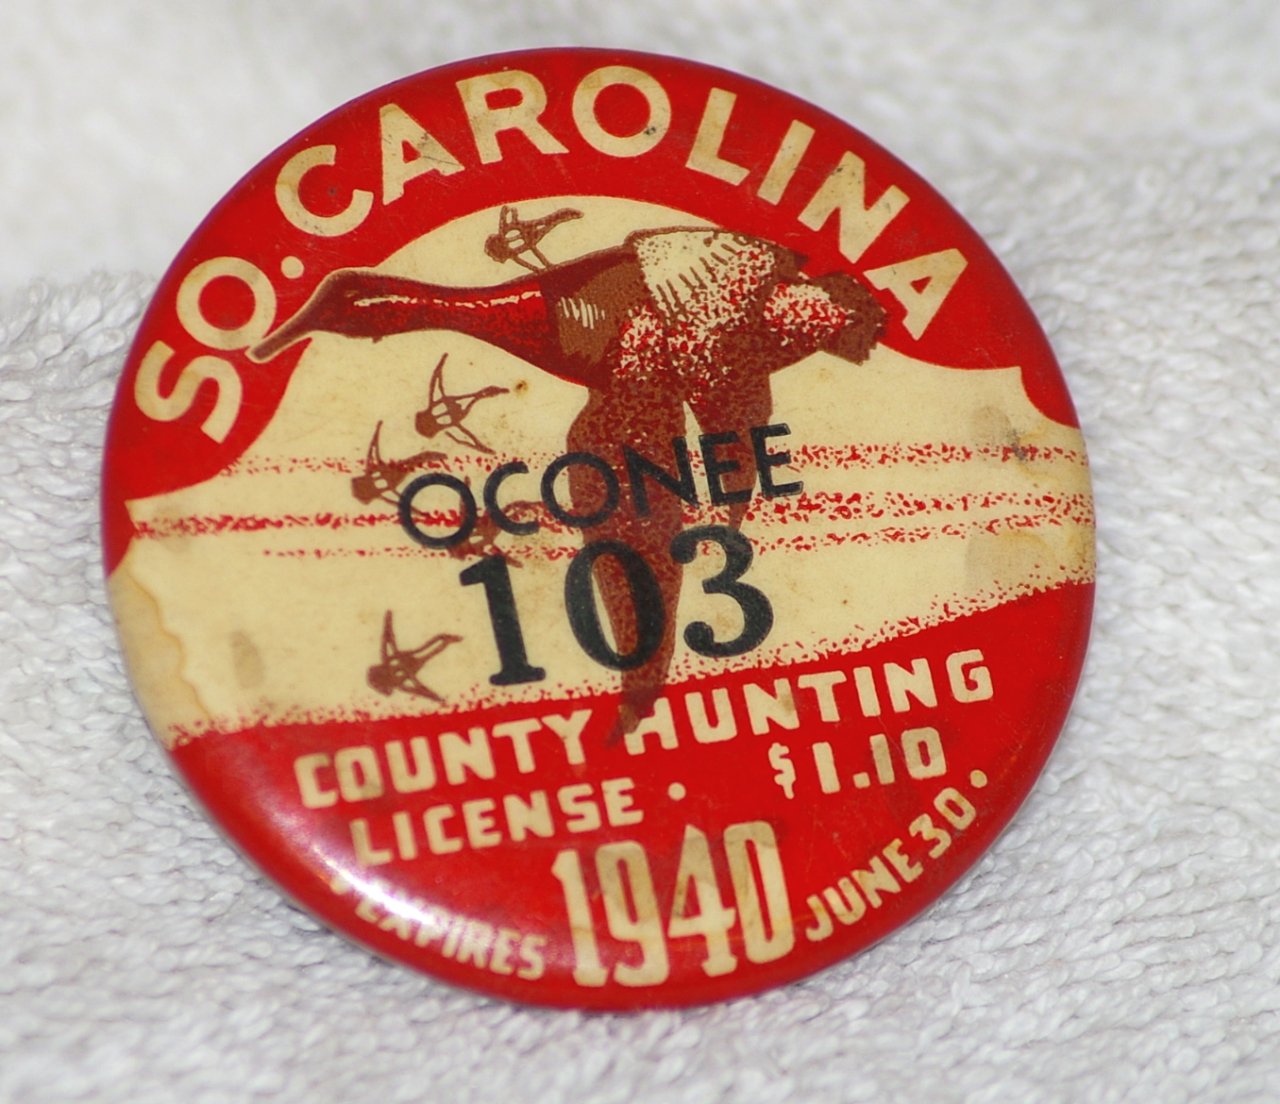 Oconee Co South Carolina Hunting License Badge with Ducks 1940